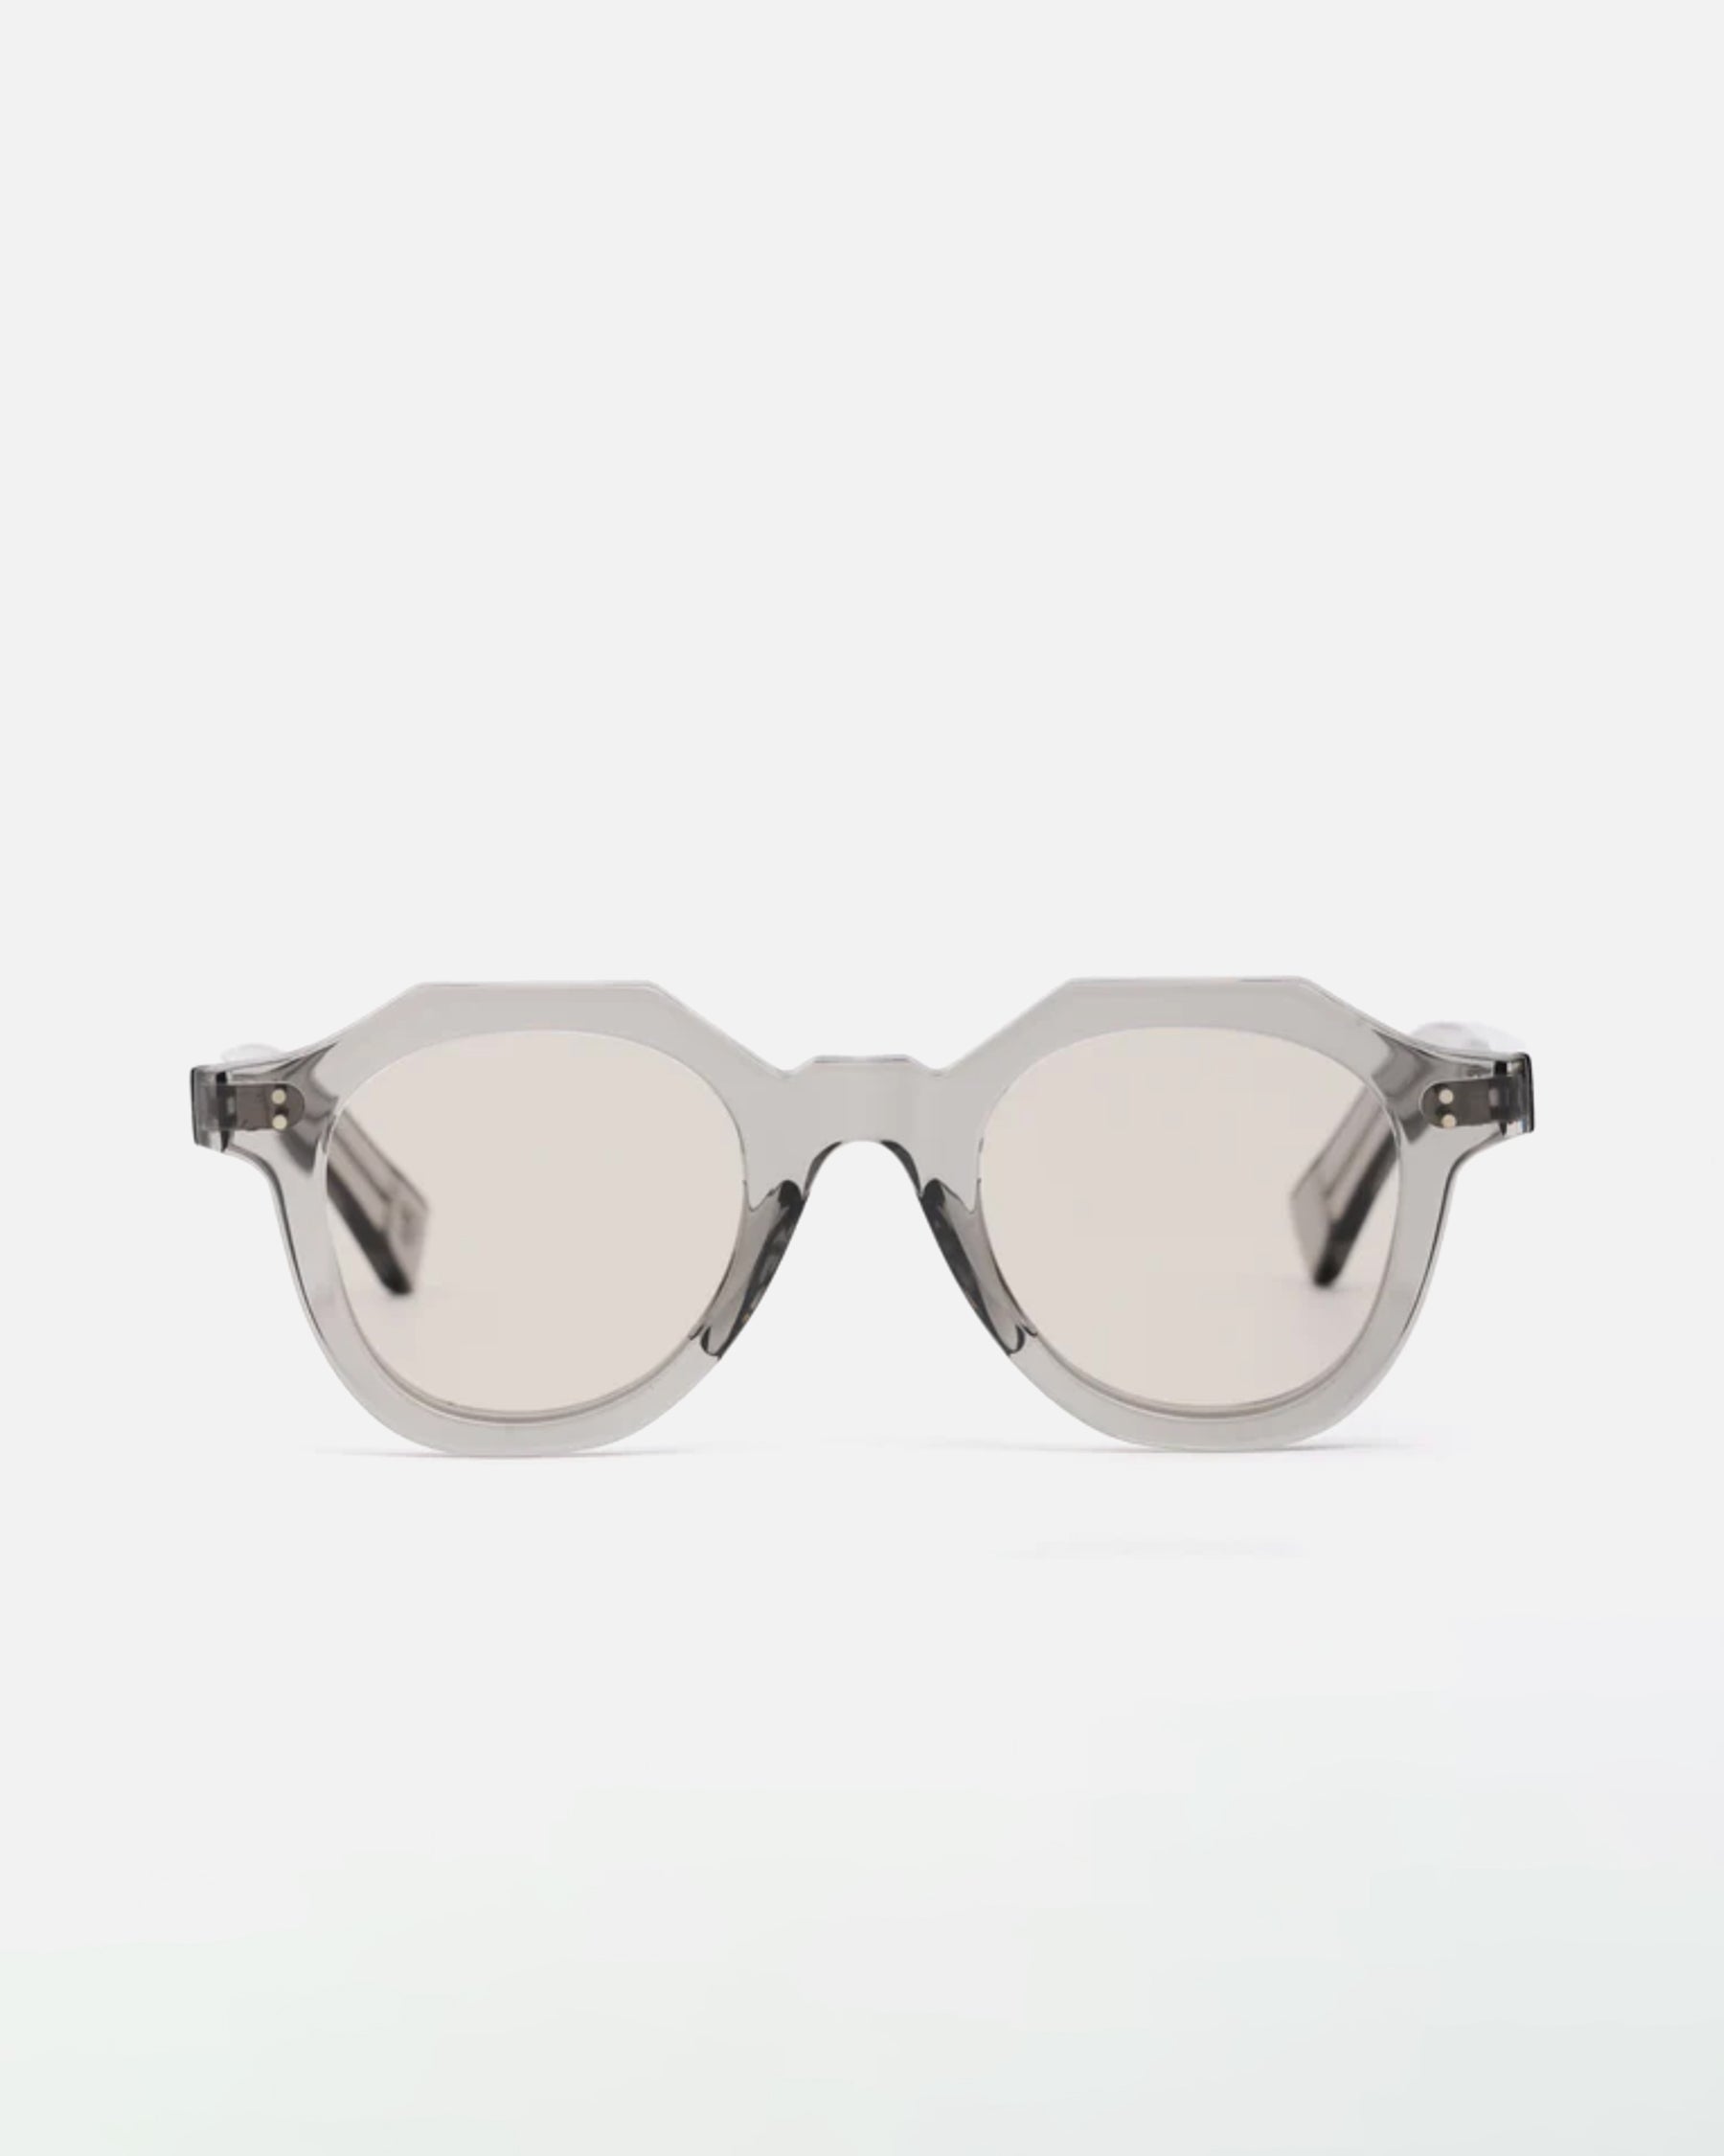 gp-02 Sunglasses grir/ Lens: Brown